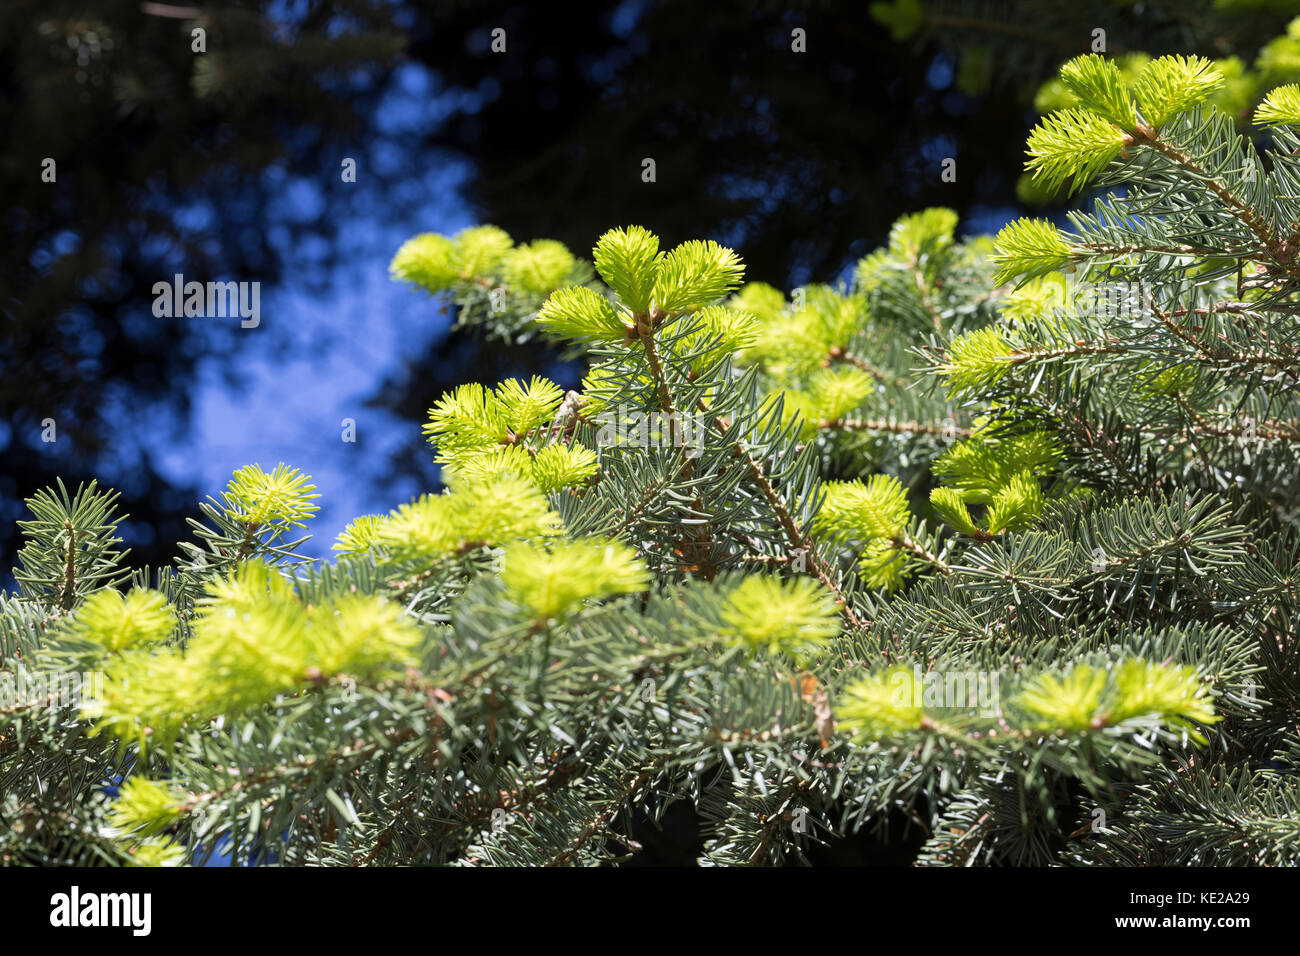 Griechische Tanne, Kefalonische Tanne, Abies cephalonica, Abies alba subsp. cephalonica, Greek fir, Grecian fir, Le sapin de Céphalonie Stock Photo